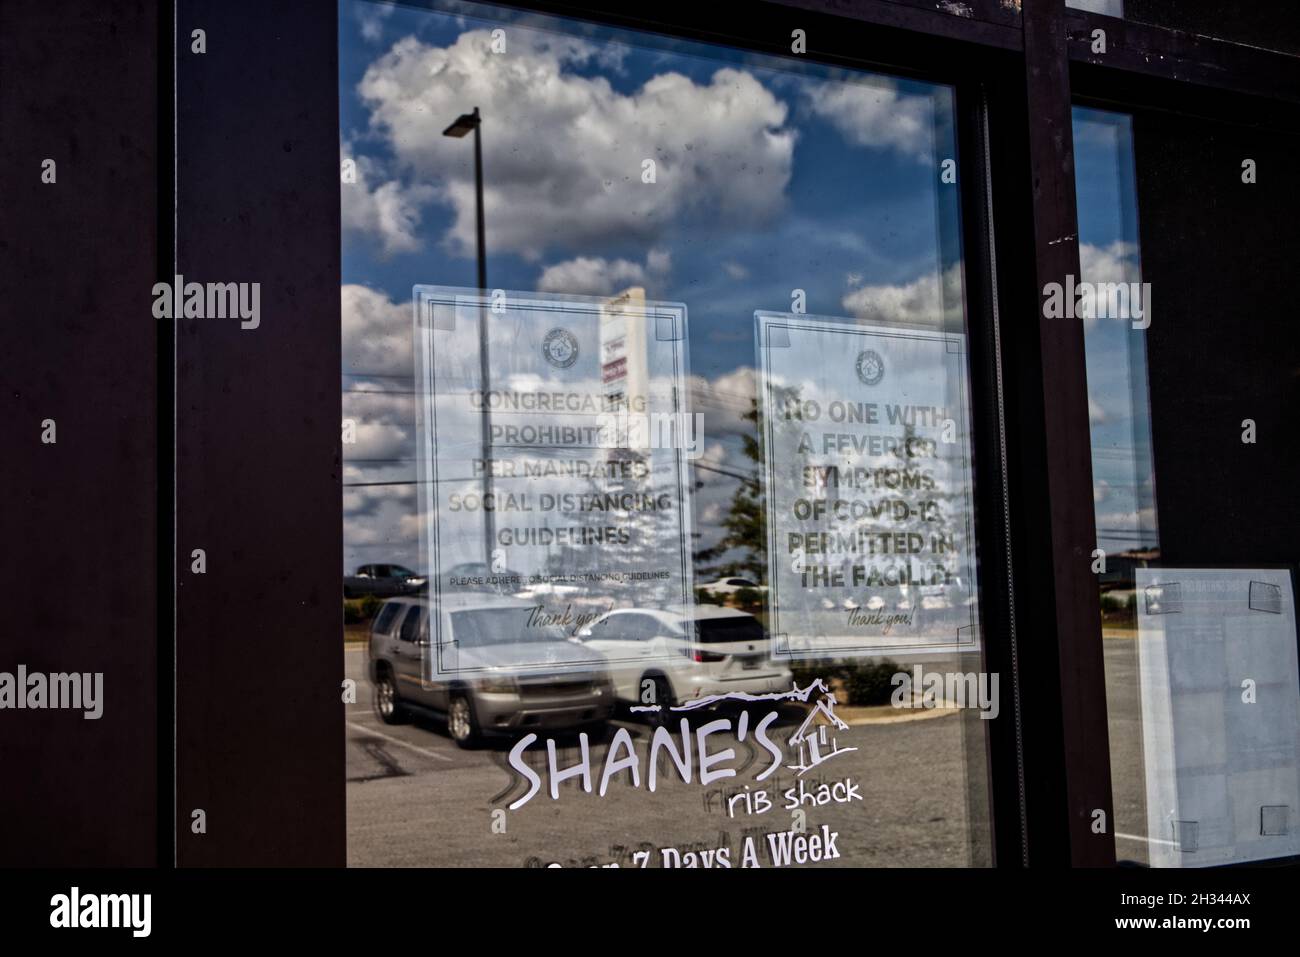 Grovetown, Ga USA - 10 14 21: Shanes rib shack restaurant covid-19 signage in doors Stock Photo